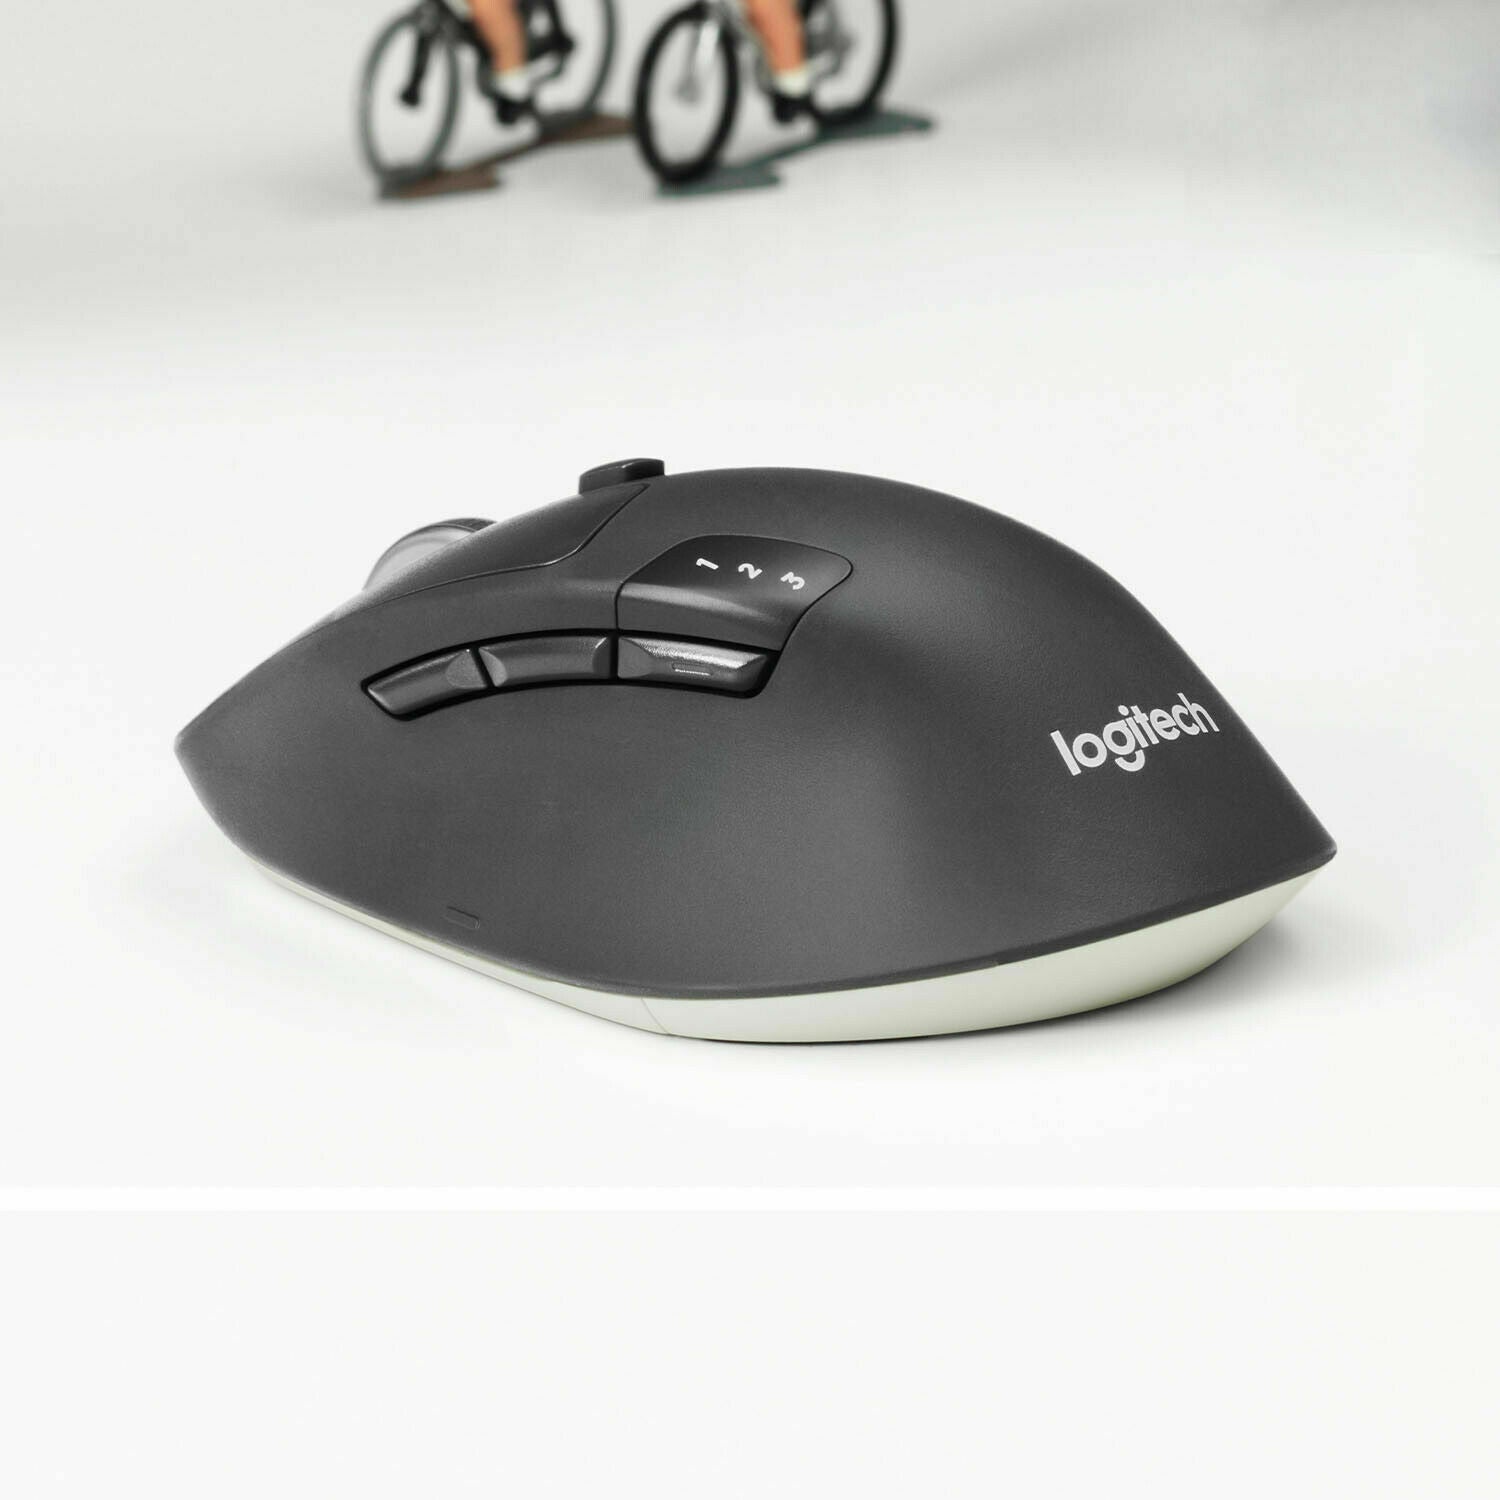 Logitech M720 Triathlon Multi-Device Wireless Optical Mouse 910-004790, Black